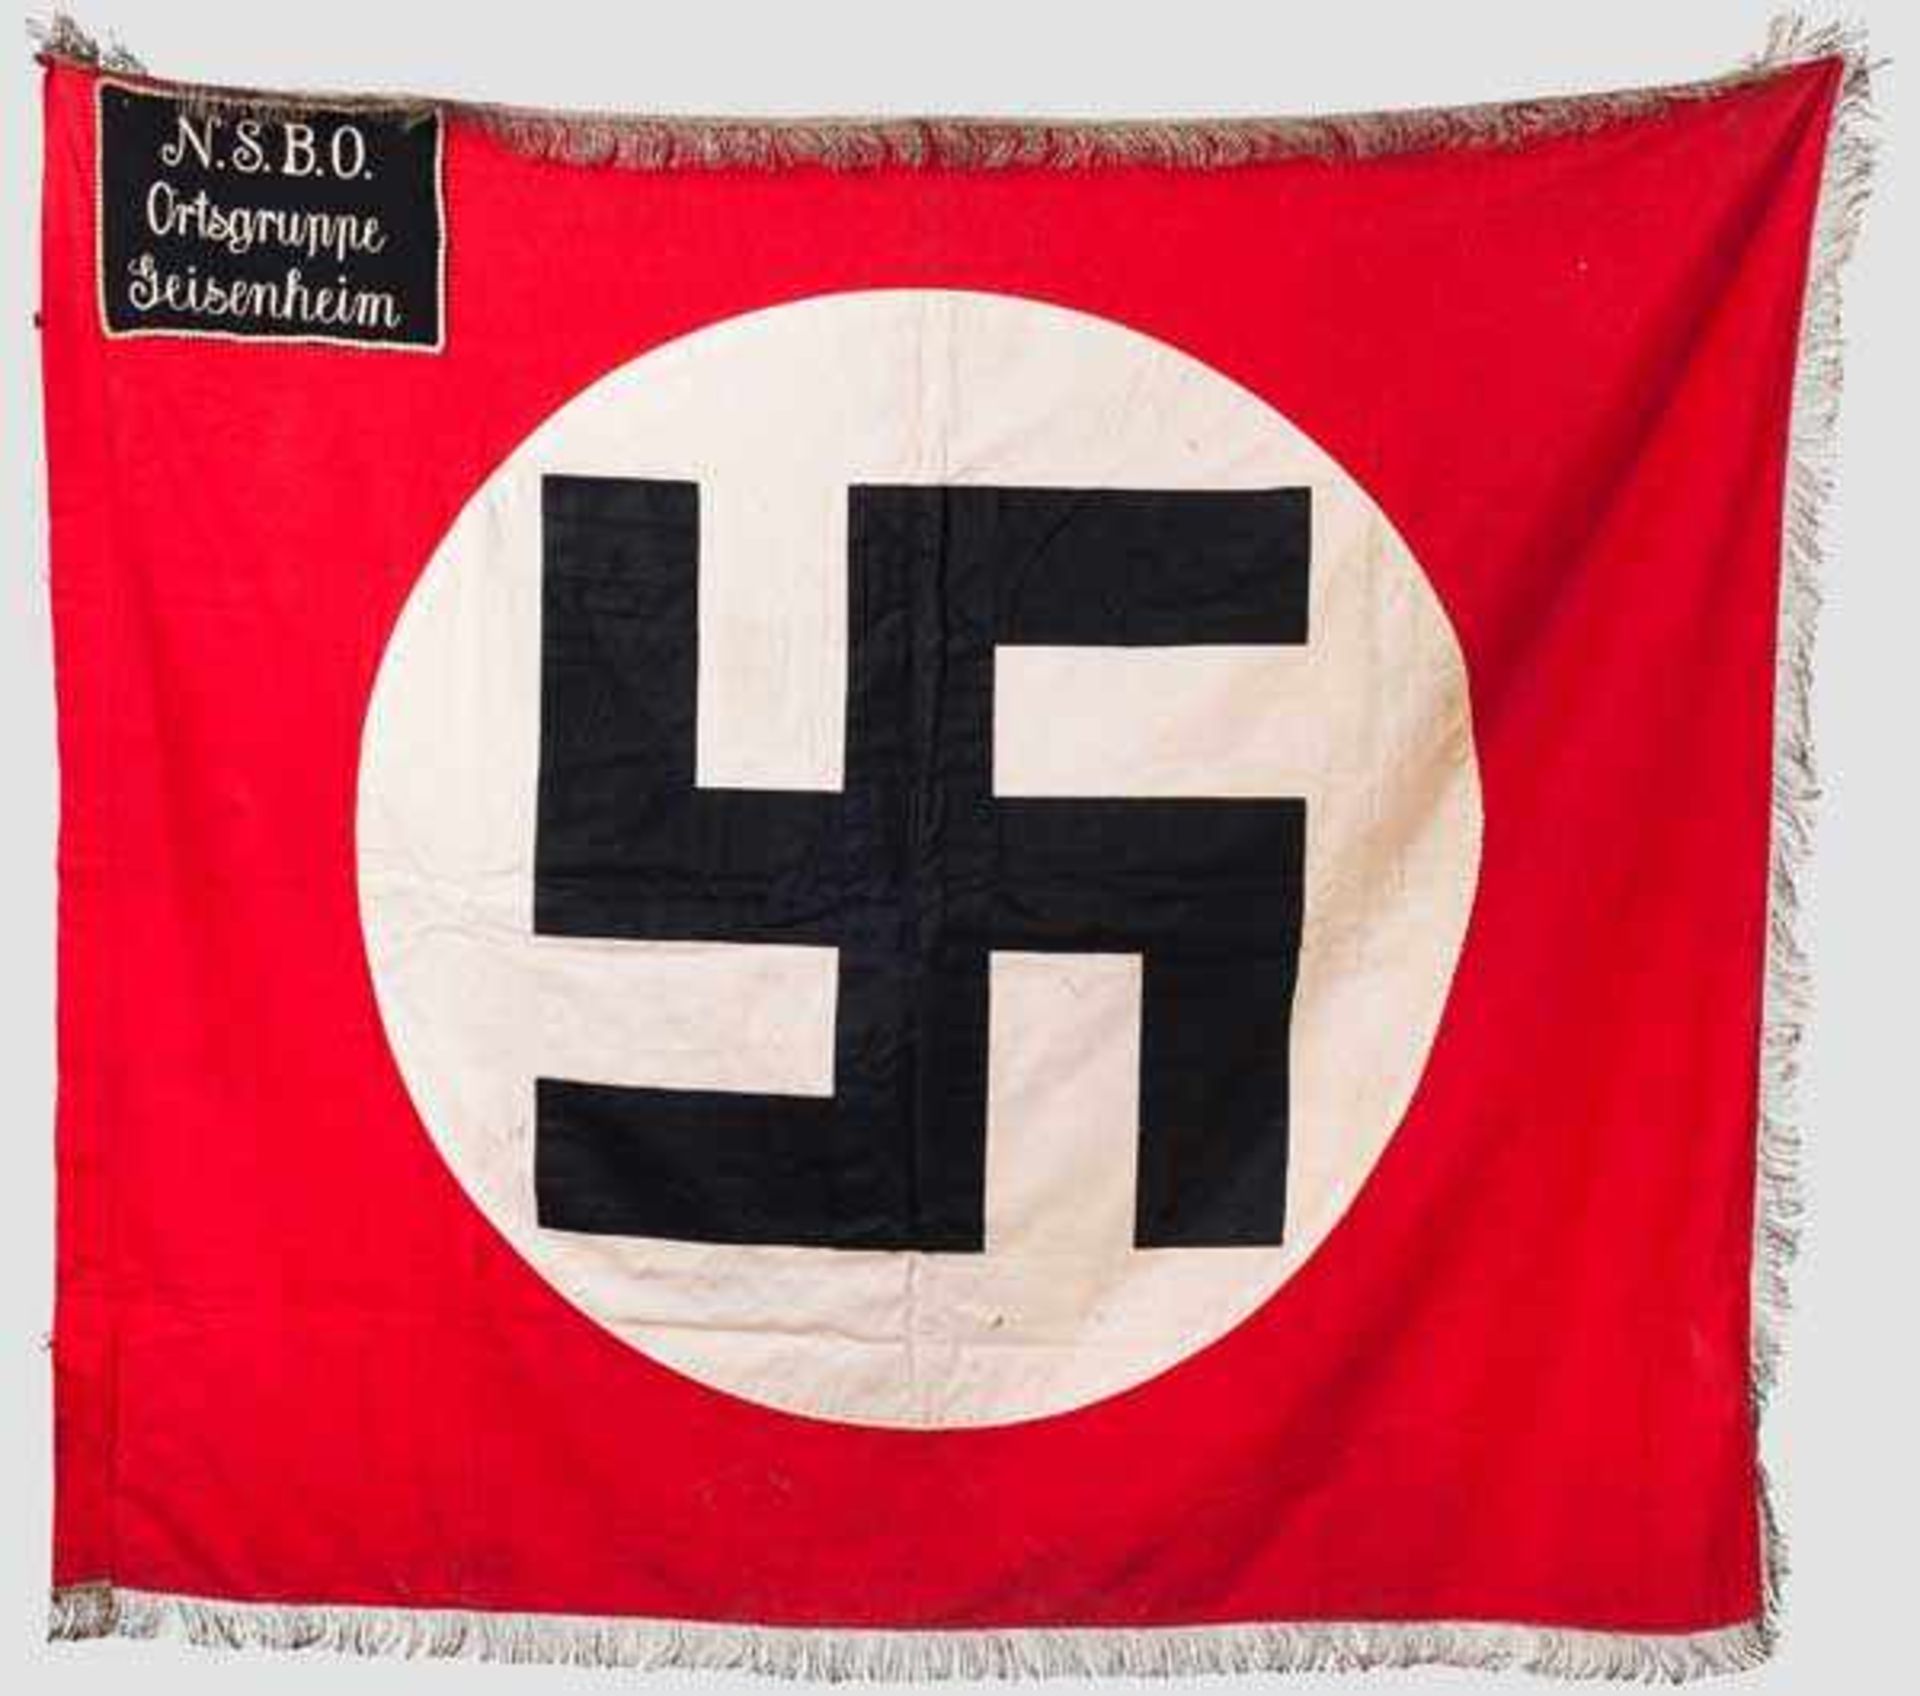 Fahne der NS-Betriebszellenorganisation (NSBO) Ortsgruppe Geisenheim um 1934 Rotes Fahnenleinen